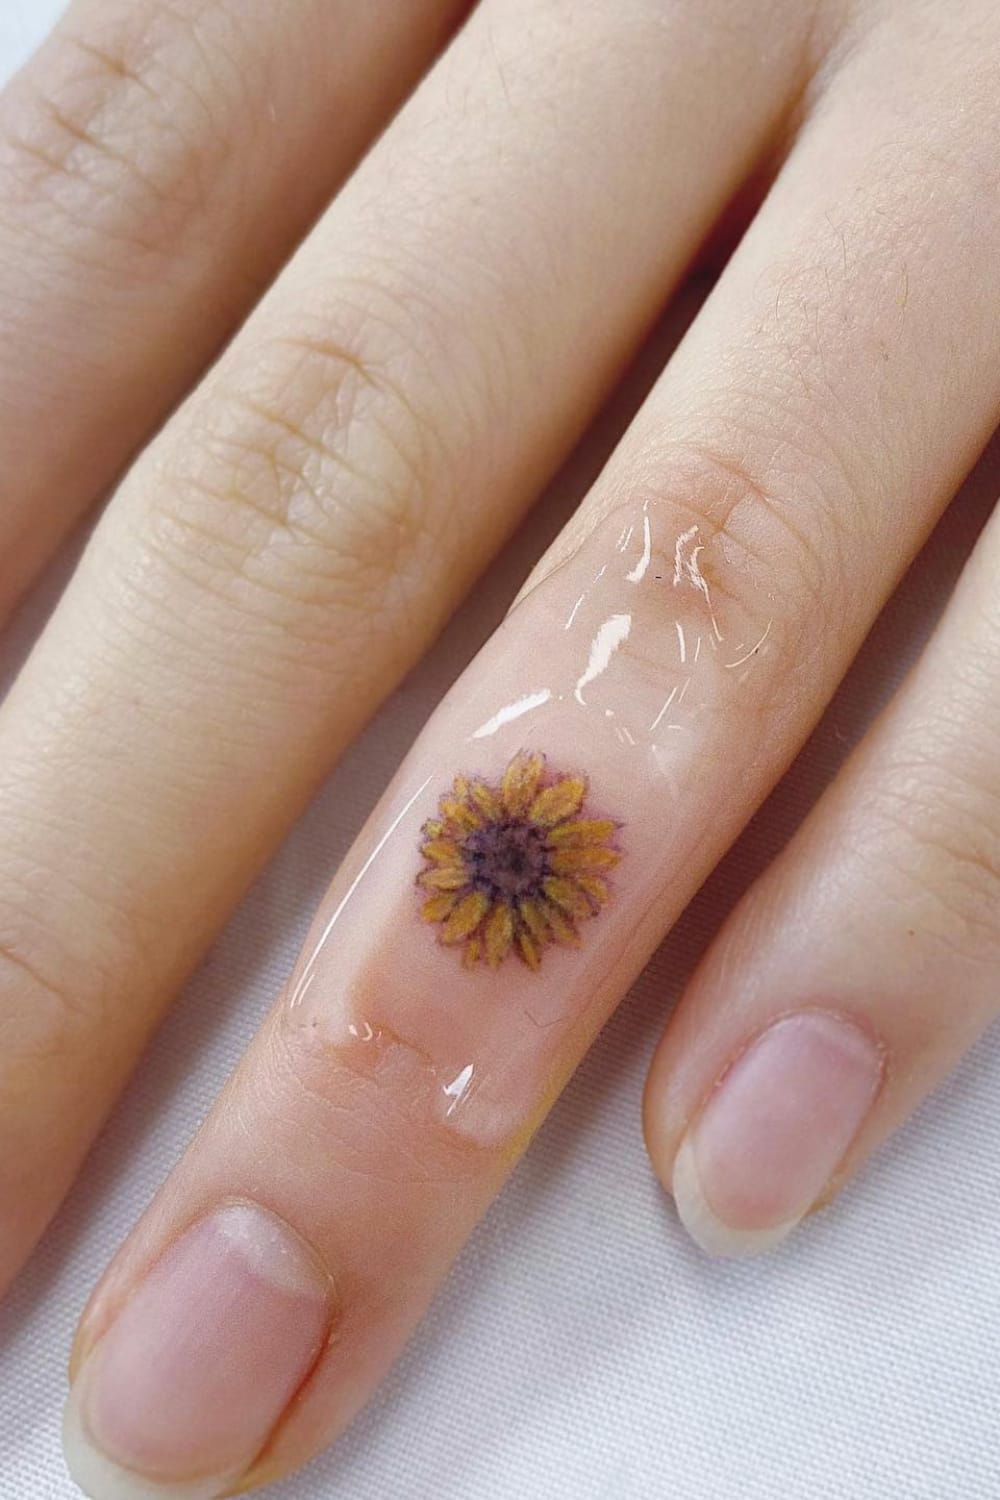 Small sunflower tattoo on finger